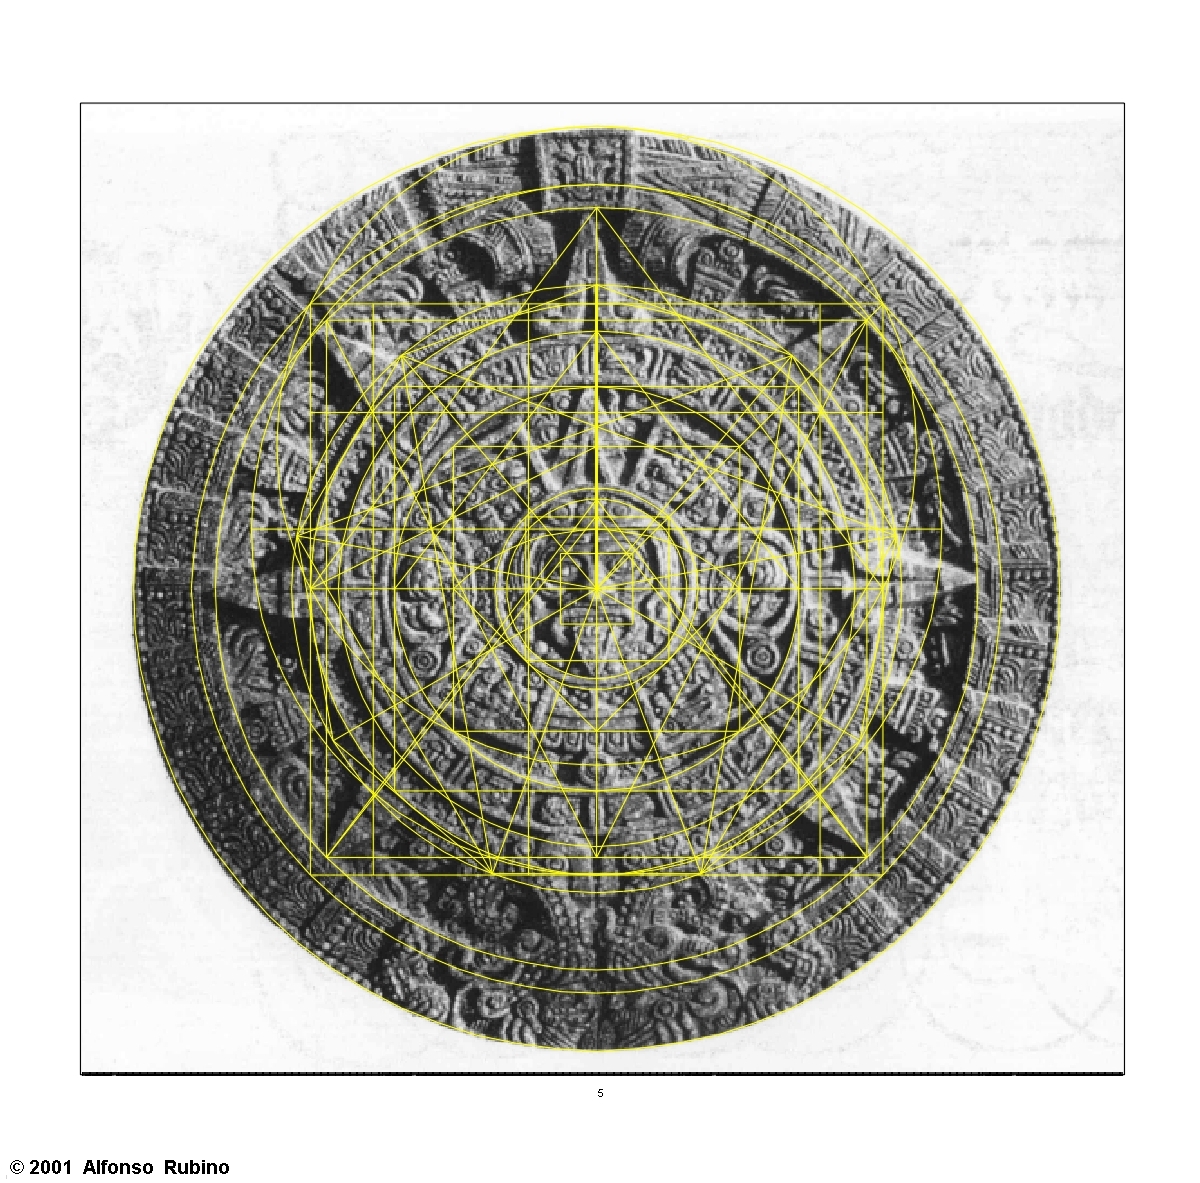 Geometric Analysis of the Aztec Sundial by Alfonso Rubino